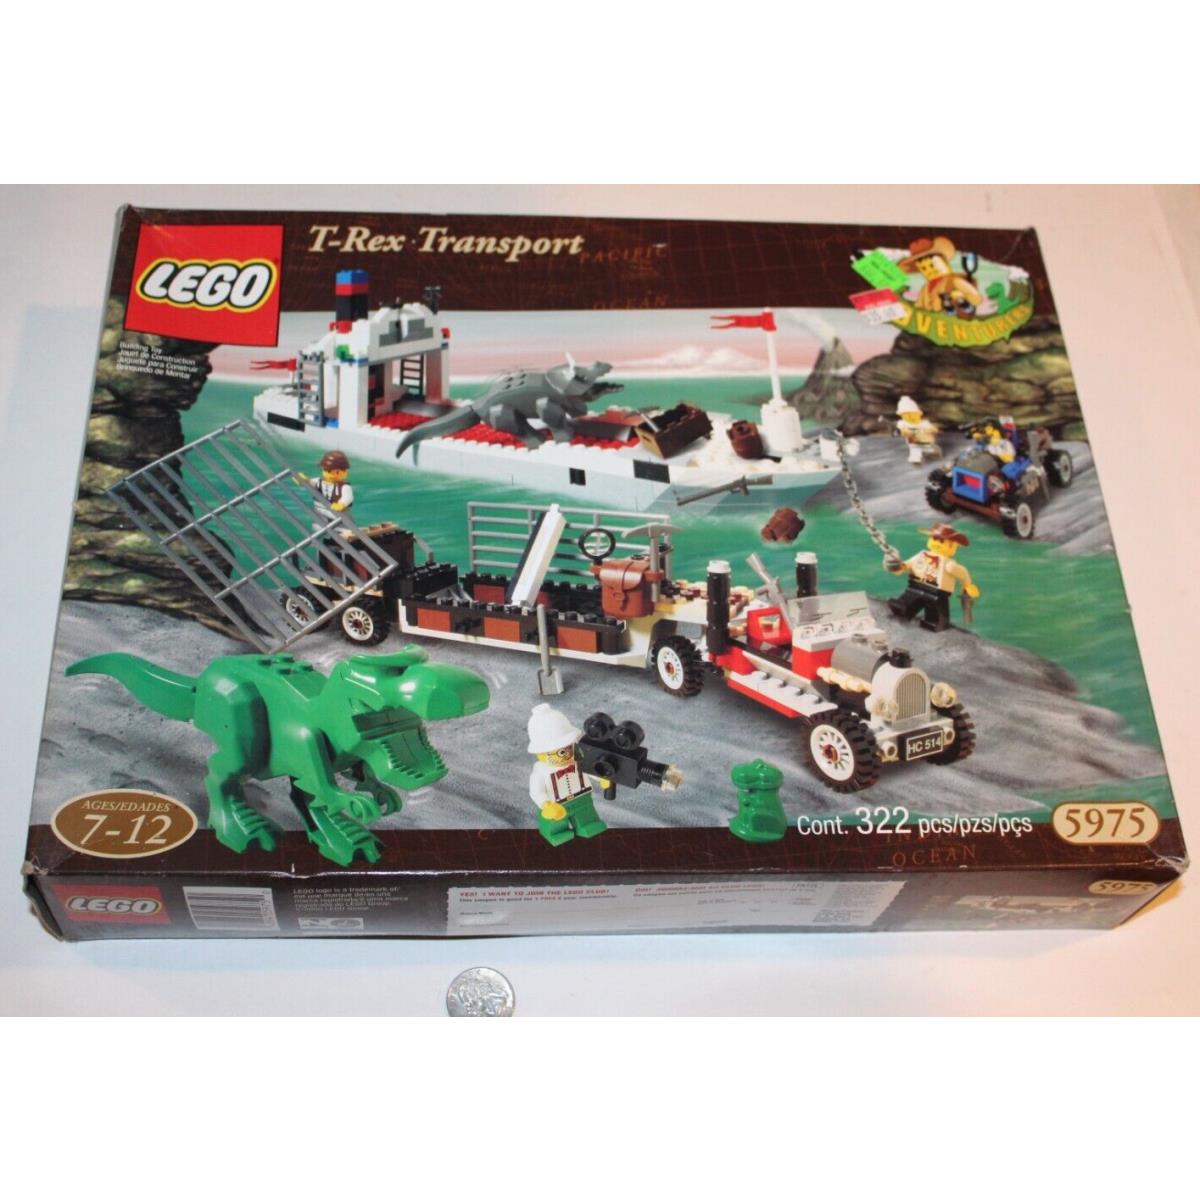 Lego 5975 Adventurers T-rex Transport Retired Minifig Nos Mip Misp Nip